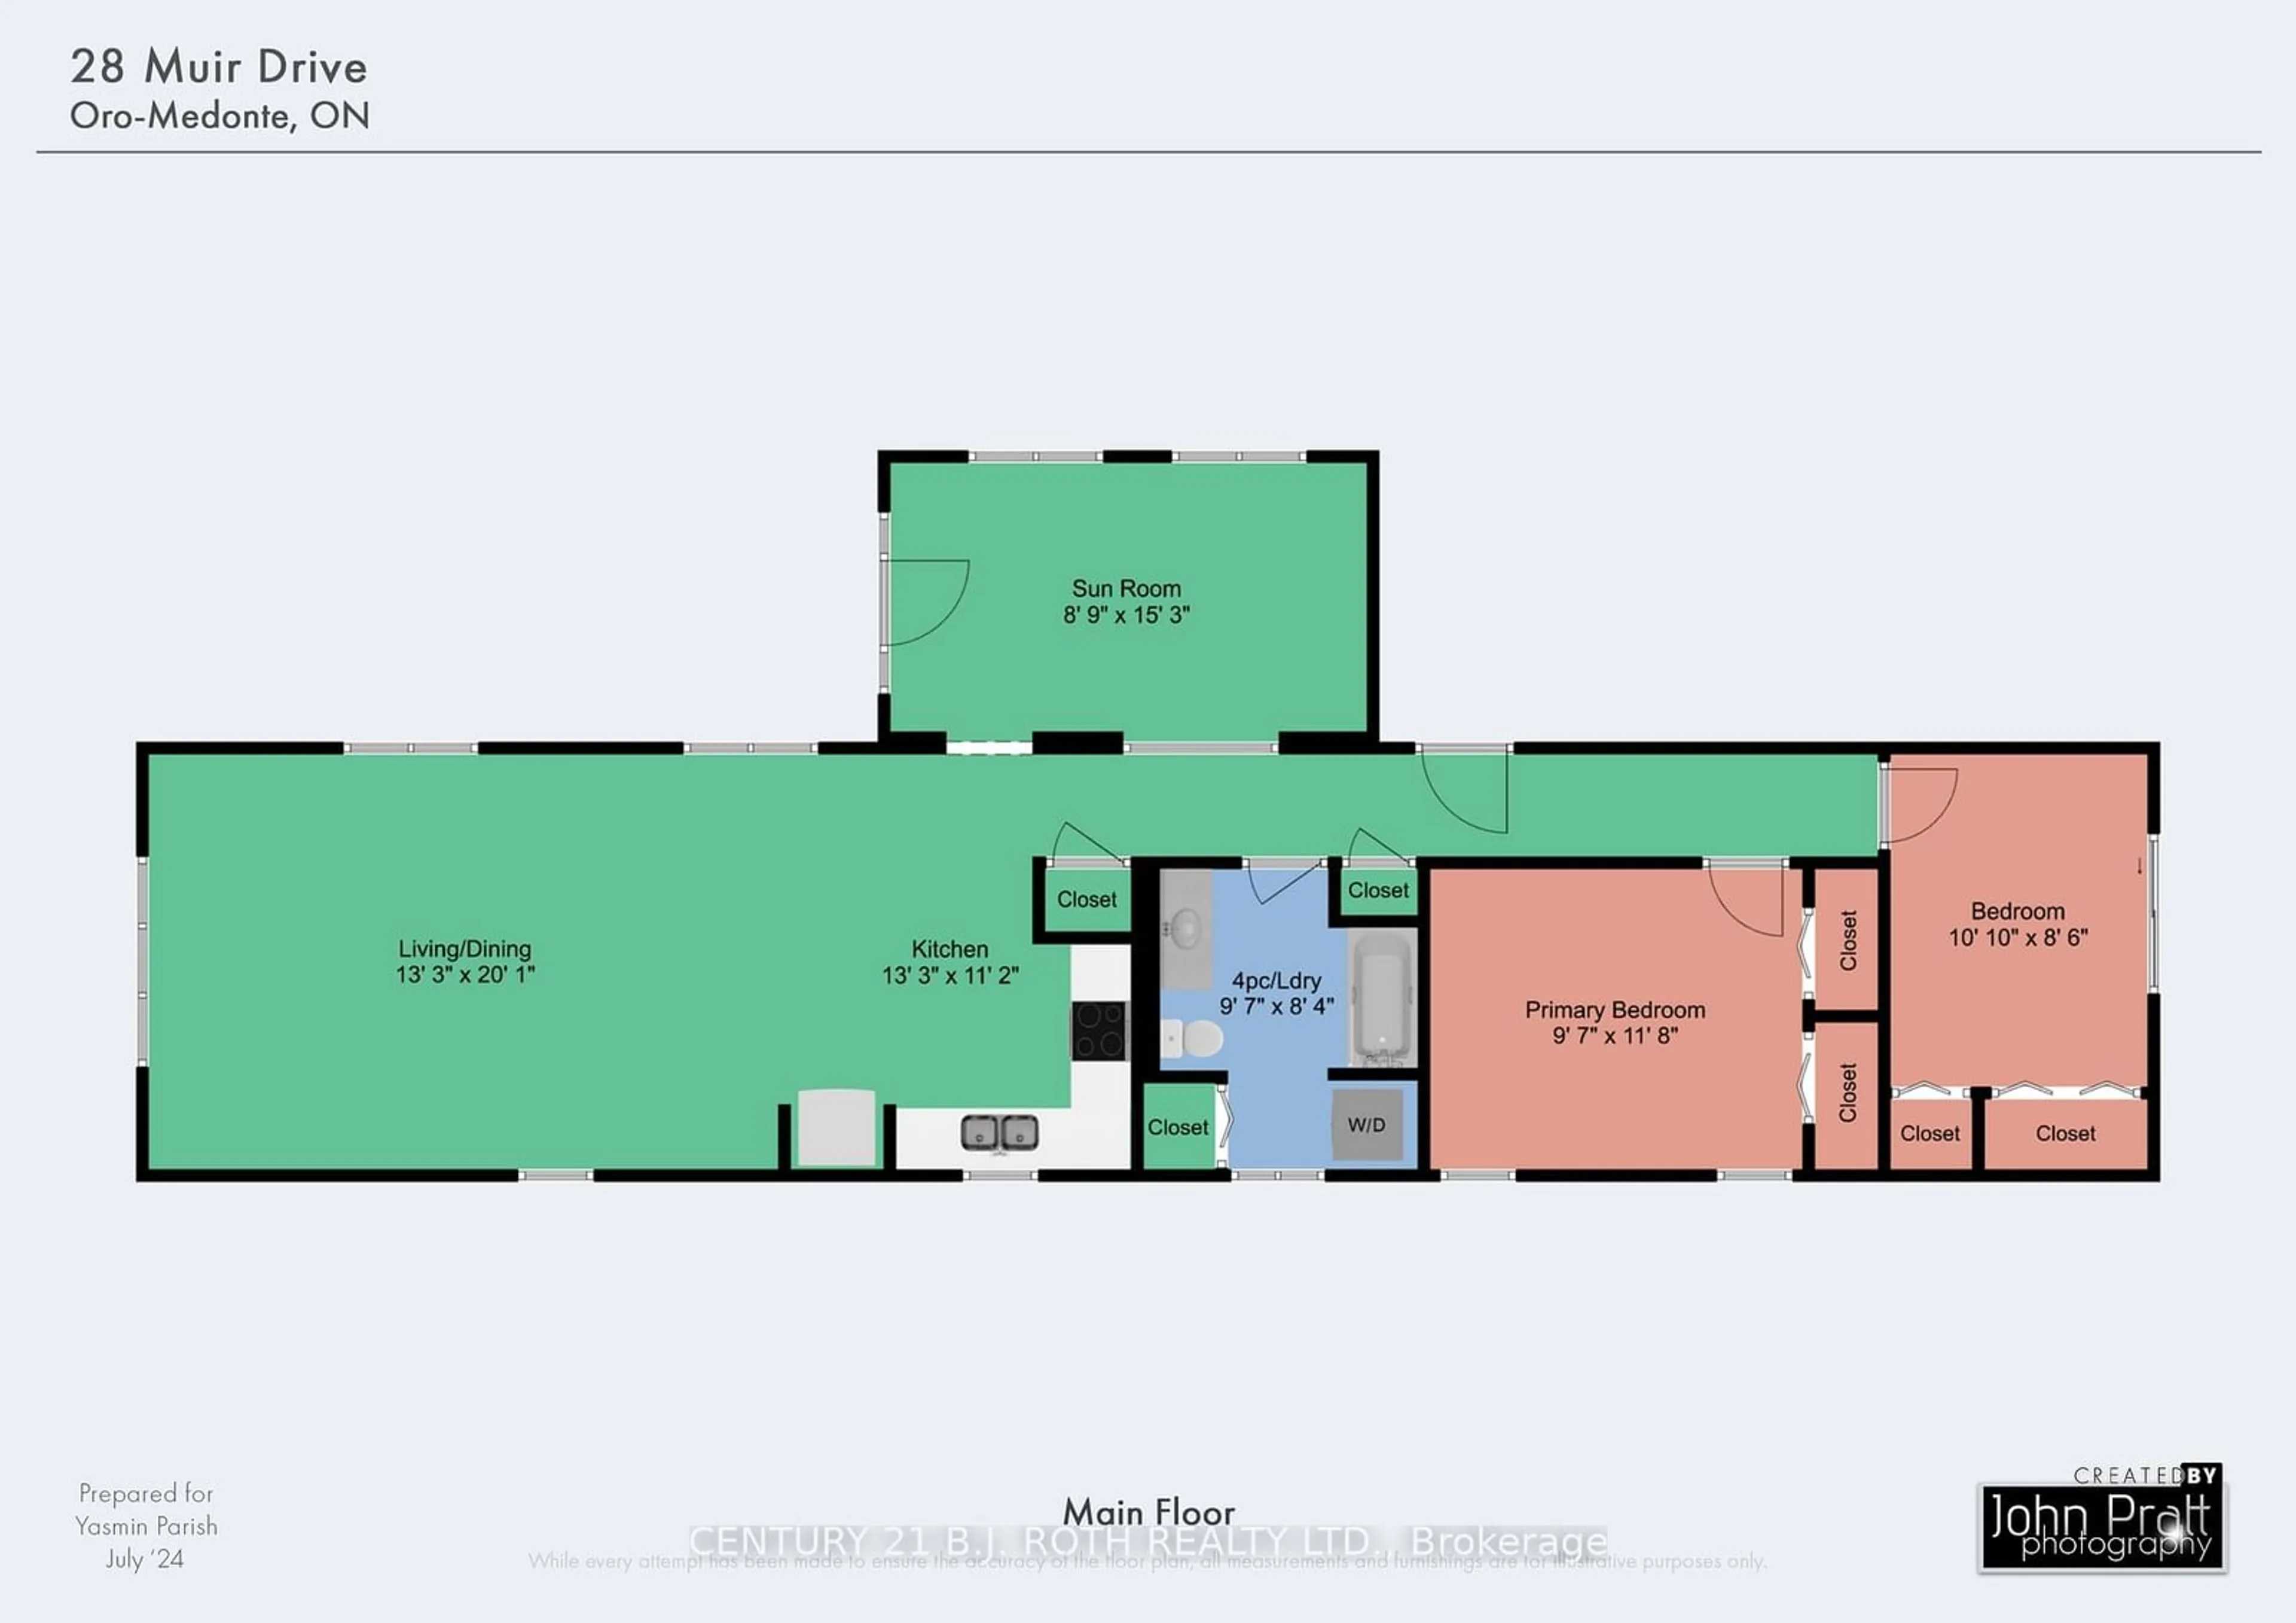 Floor plan for 28 Muir Dr, Orillia Ontario L3V 0P9